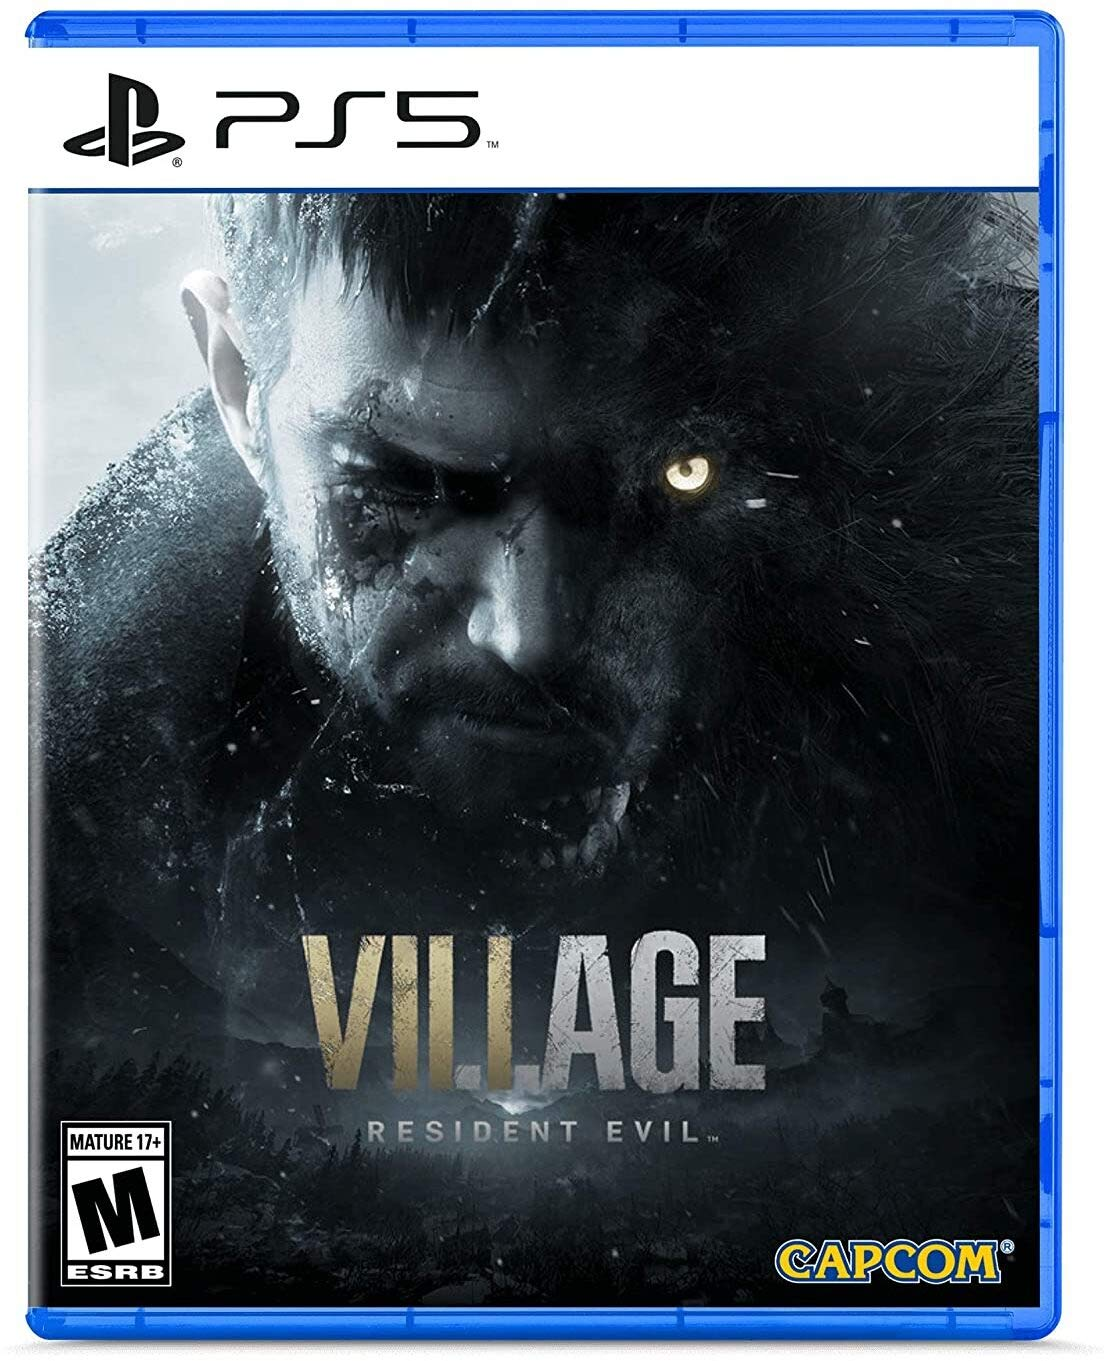 Amazon.com: Resident Evil Village - PlayStation 5 Standard Edition: Capcom U S A Inc: Video Games $59.99